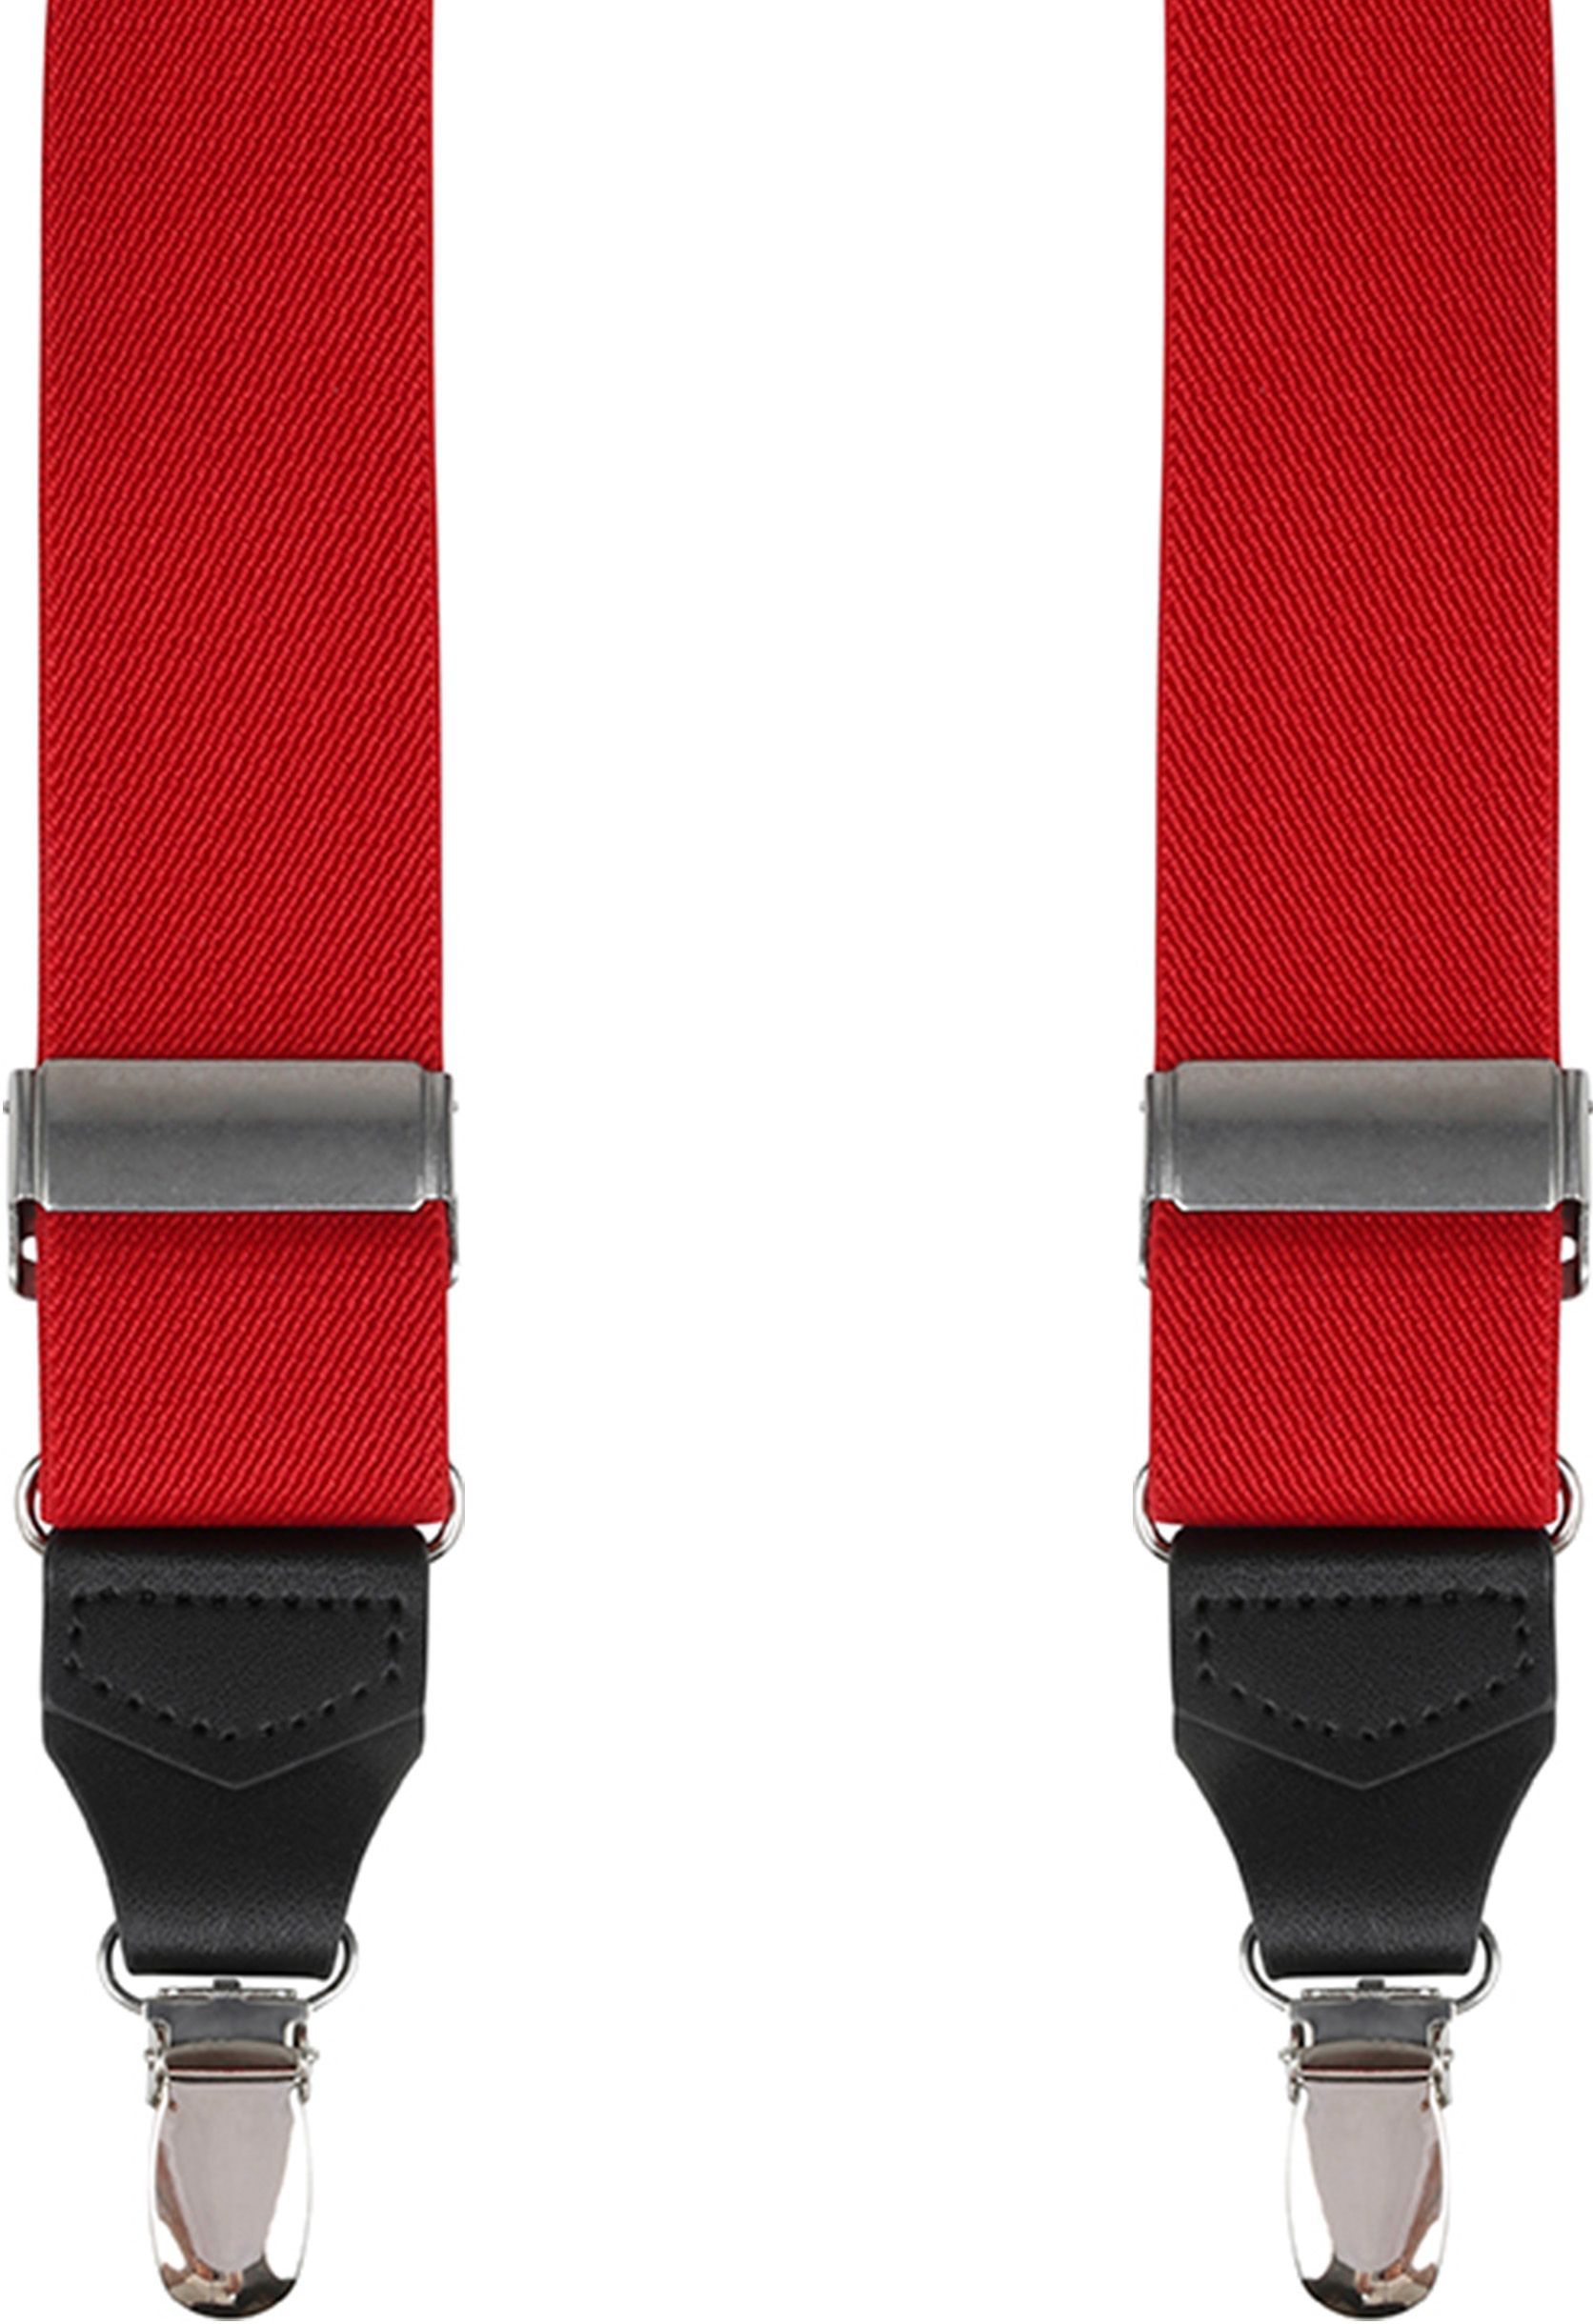 Suitable Suspenders Luxe Red